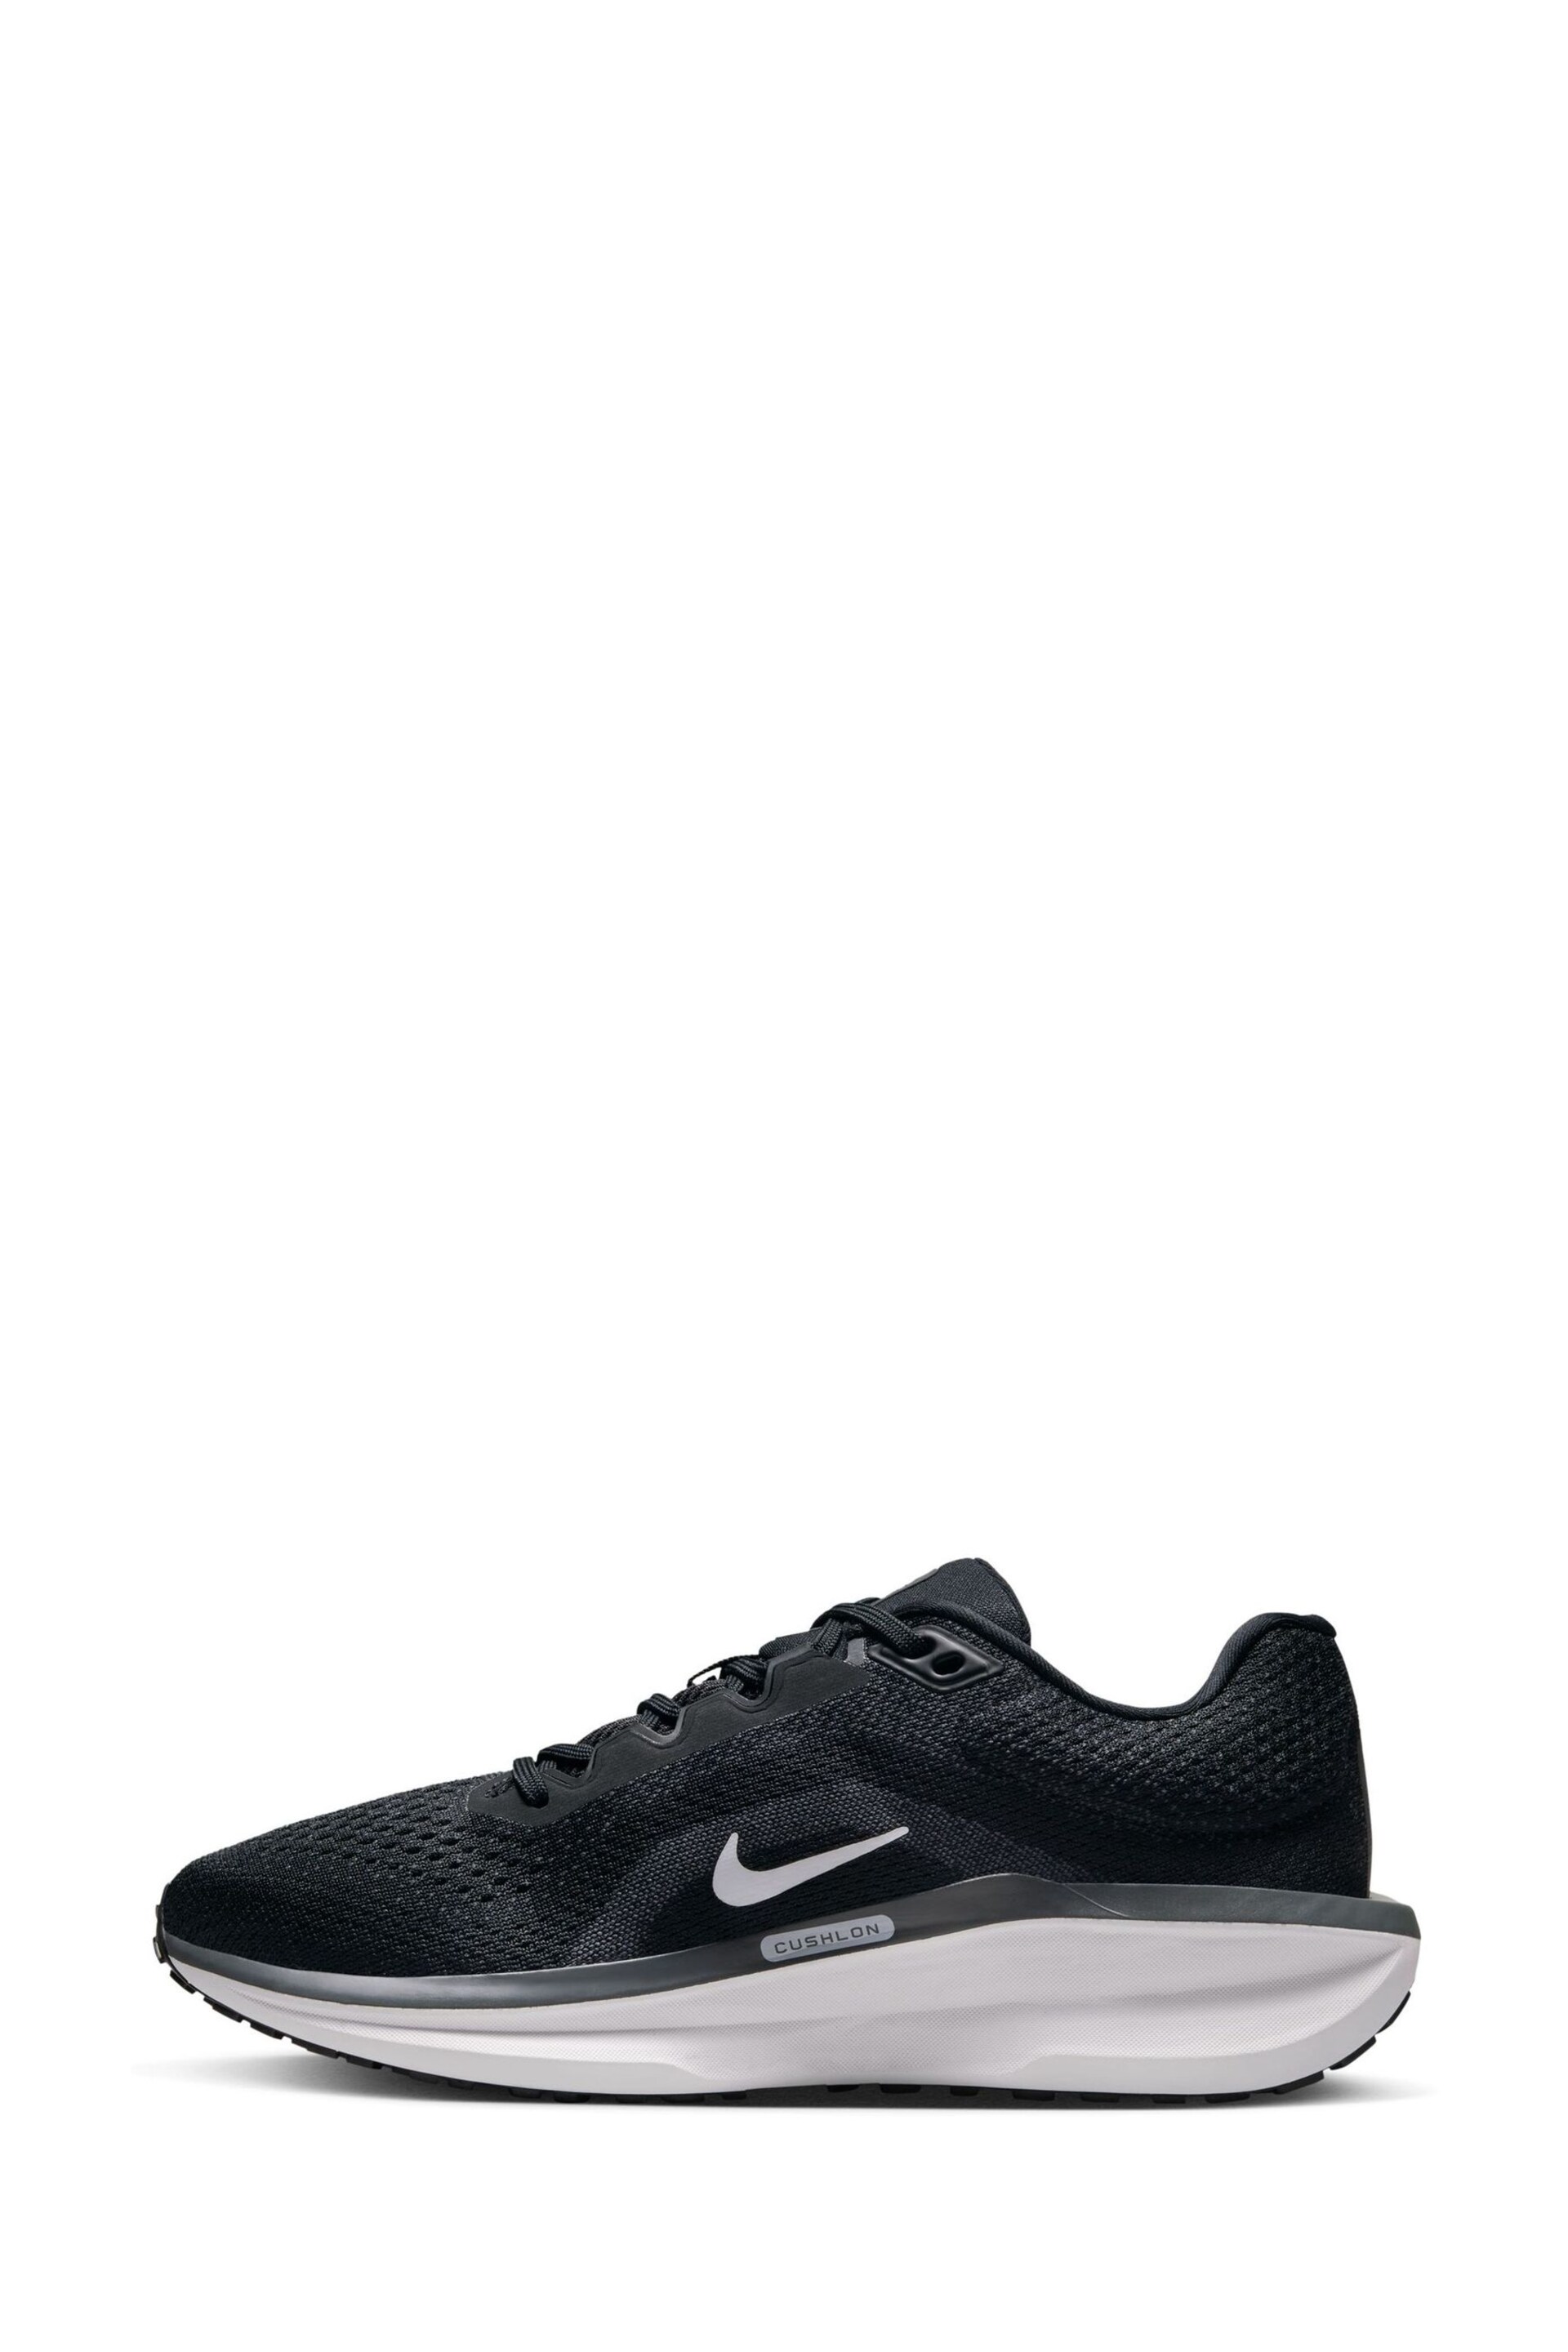 Nike Black/White Winflo 11 Road Running Trainers - Image 4 of 11